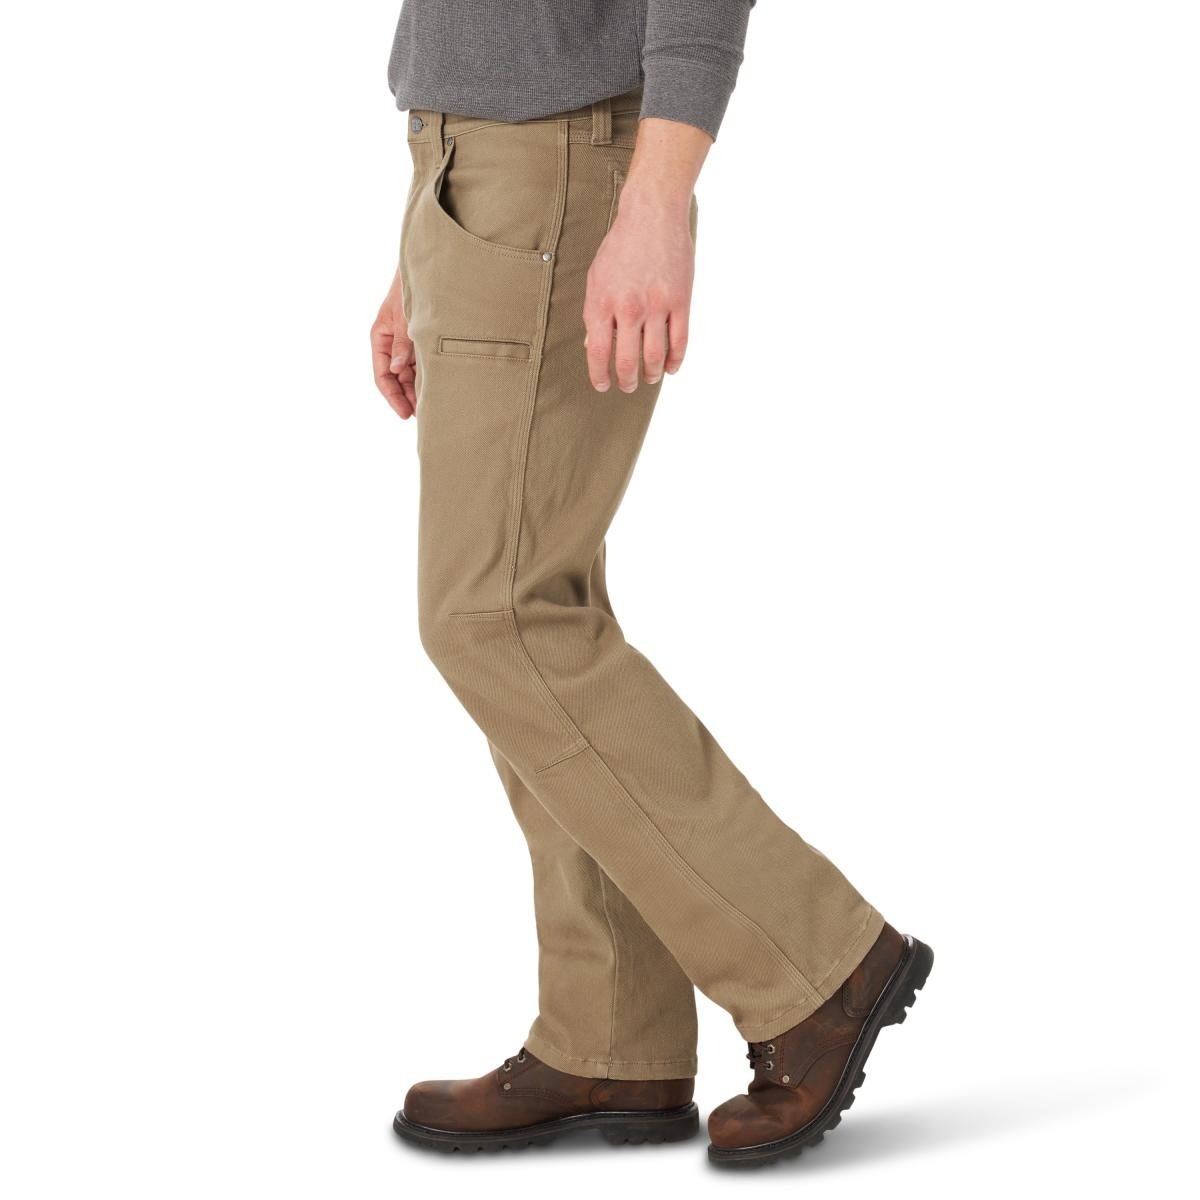 Wrangler Men's Rugged Extra Pocket Utility Pant